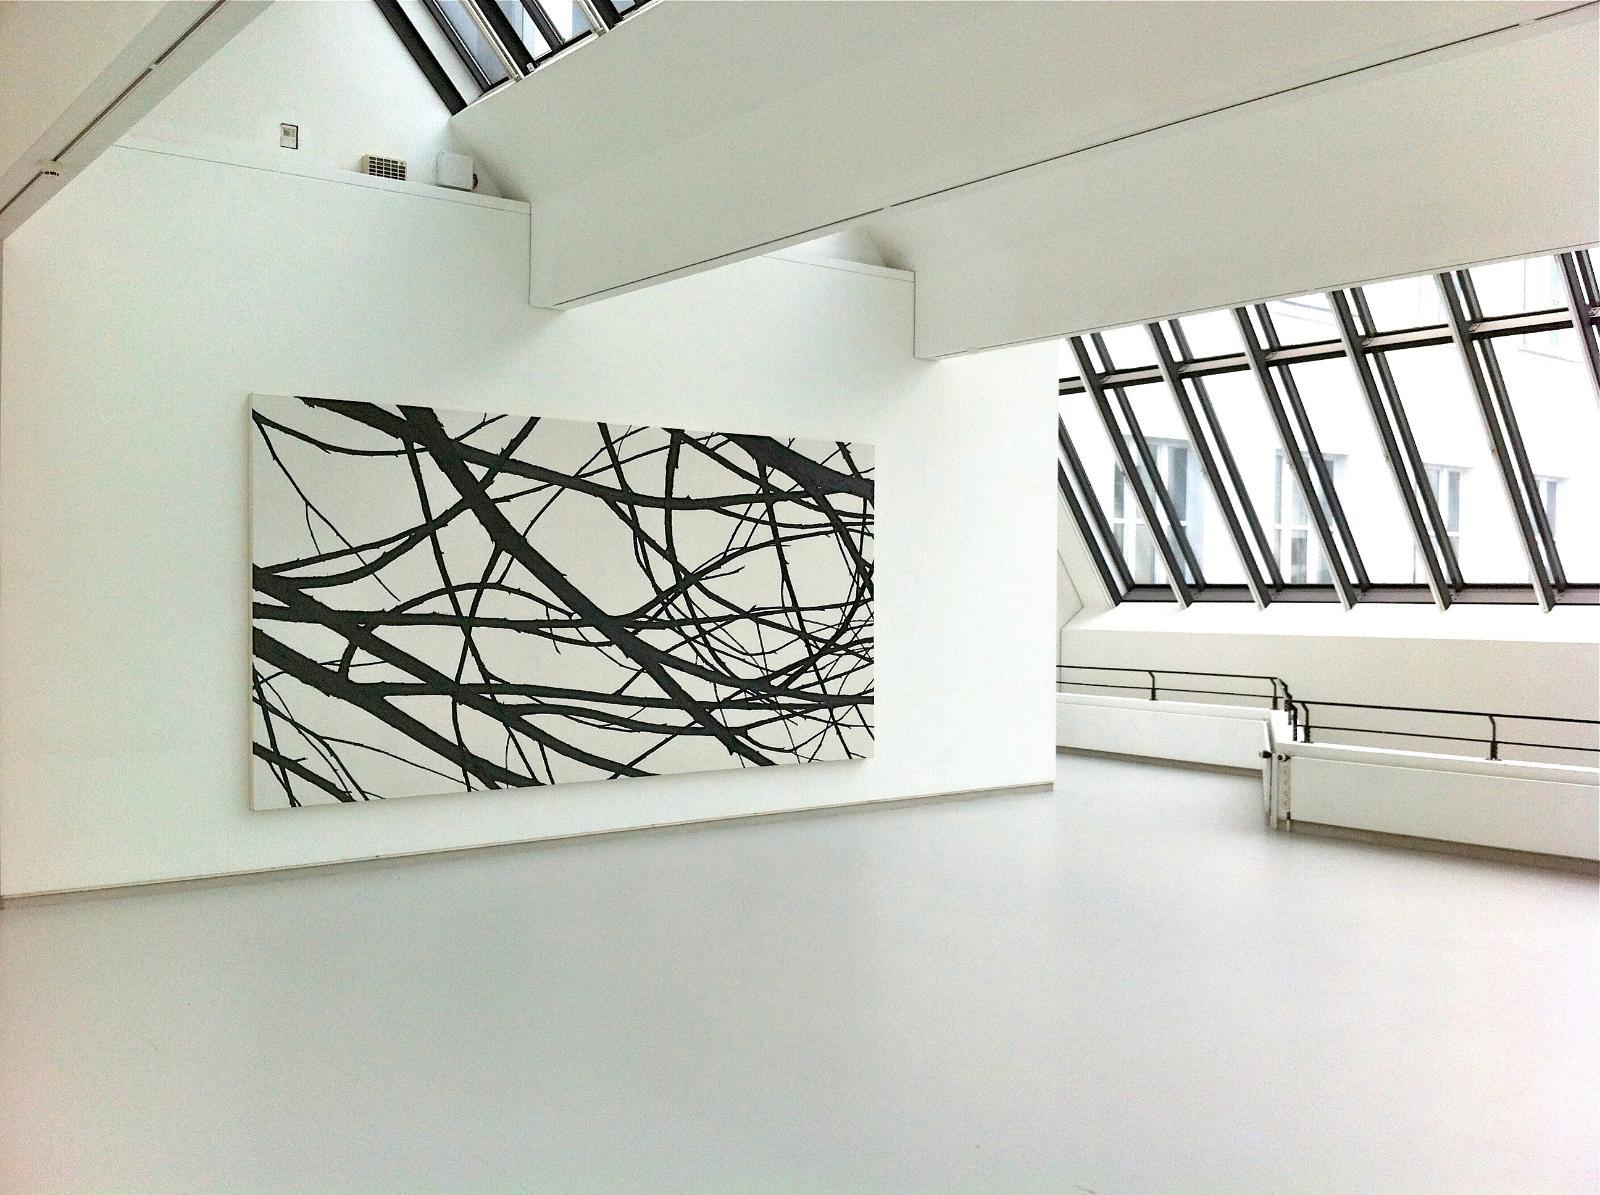 Helge Hommes, WALDESRUH, 2005, Öl auf Leinwand, 230 x 450 cm